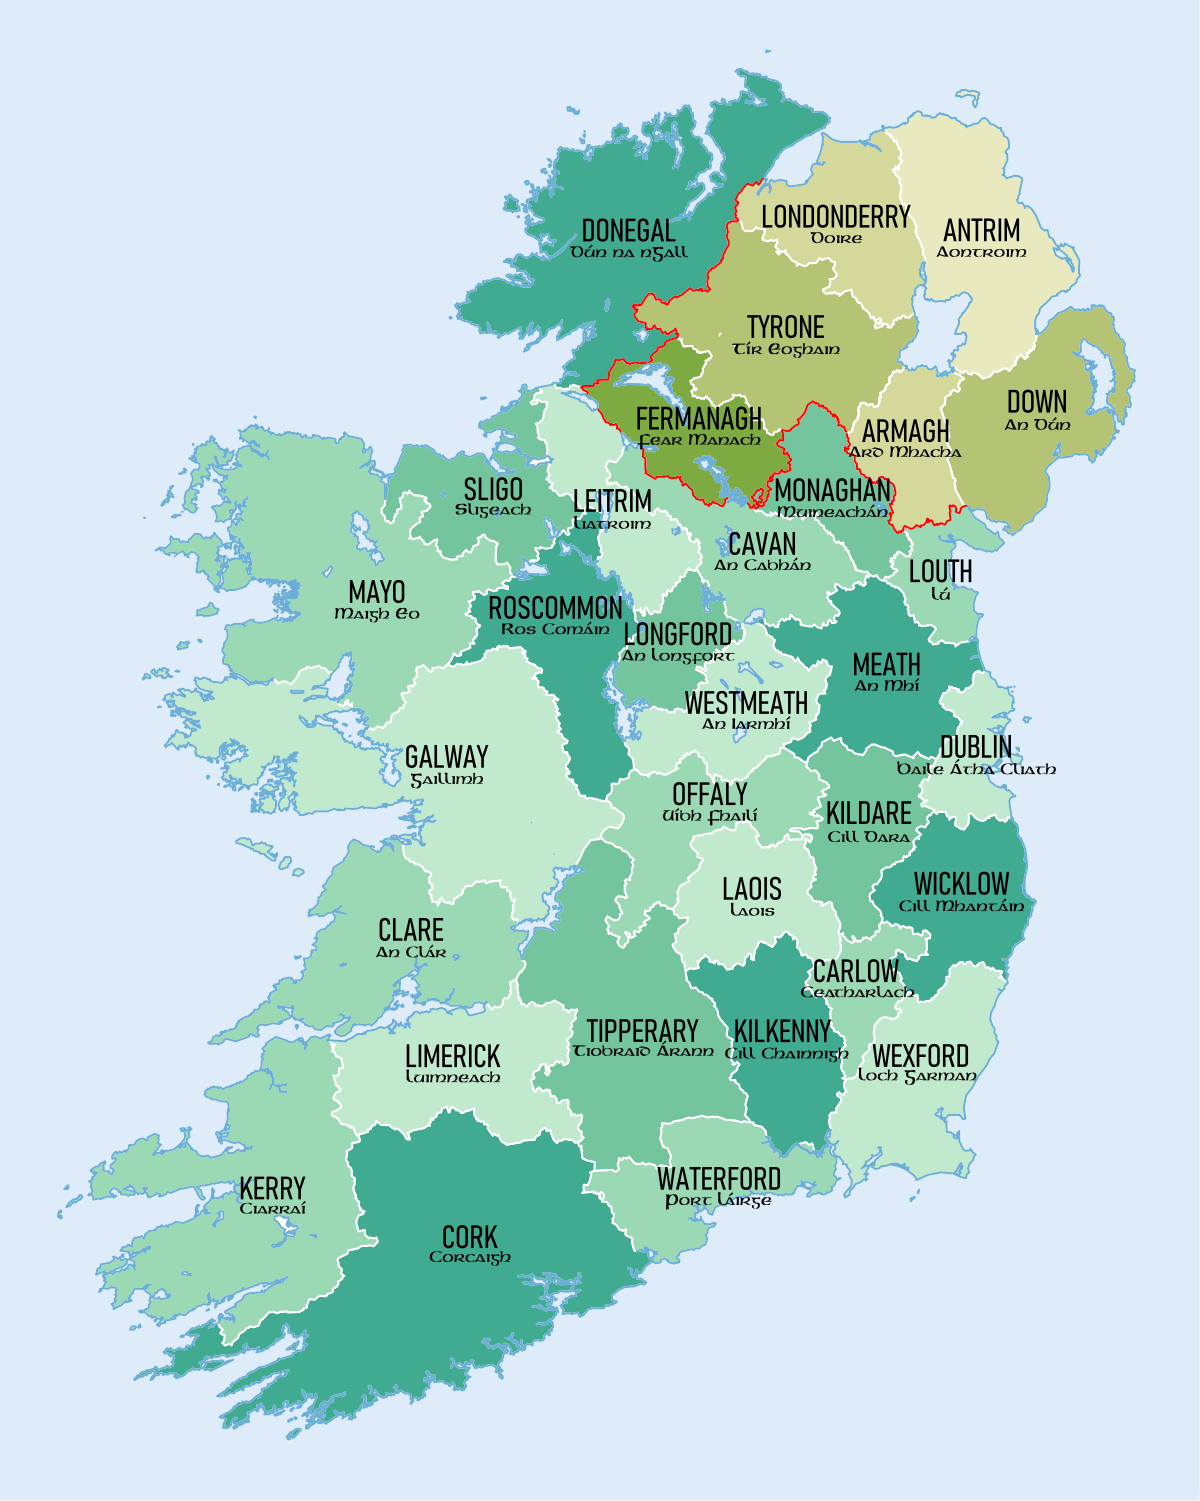 Counties Of Ireland Wikipedia